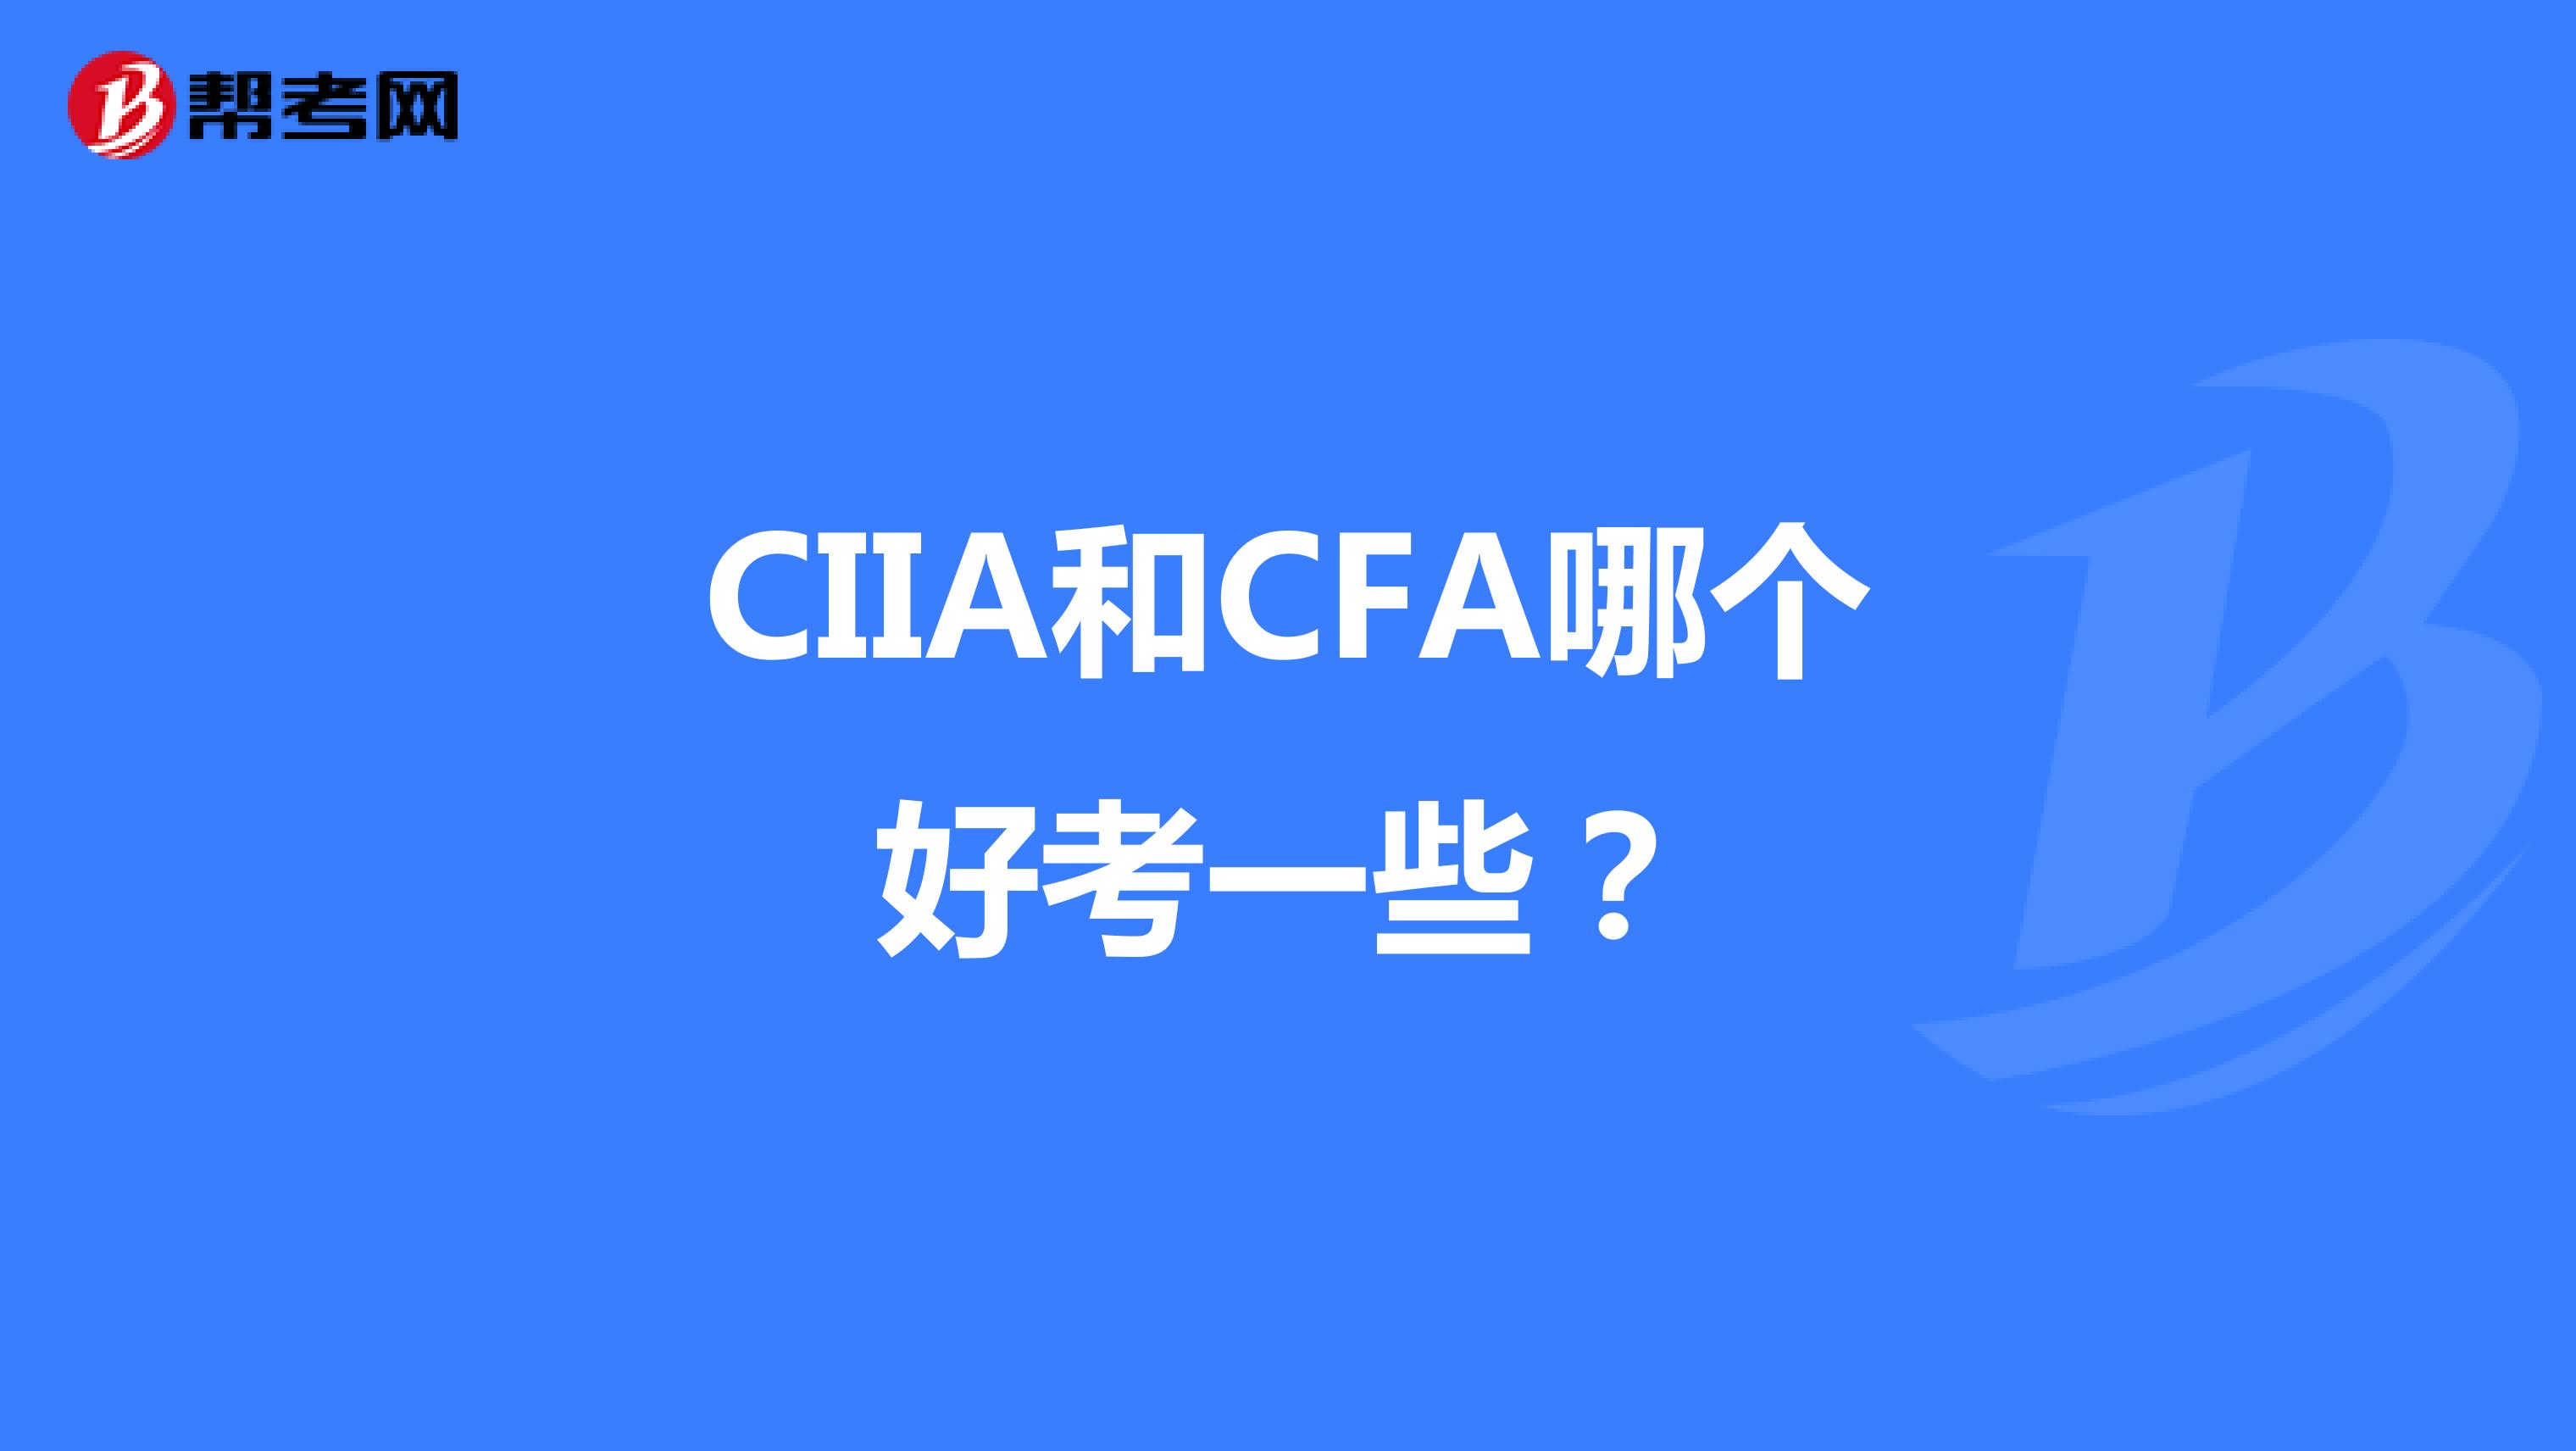 CIIA和CFA哪个好考一些？